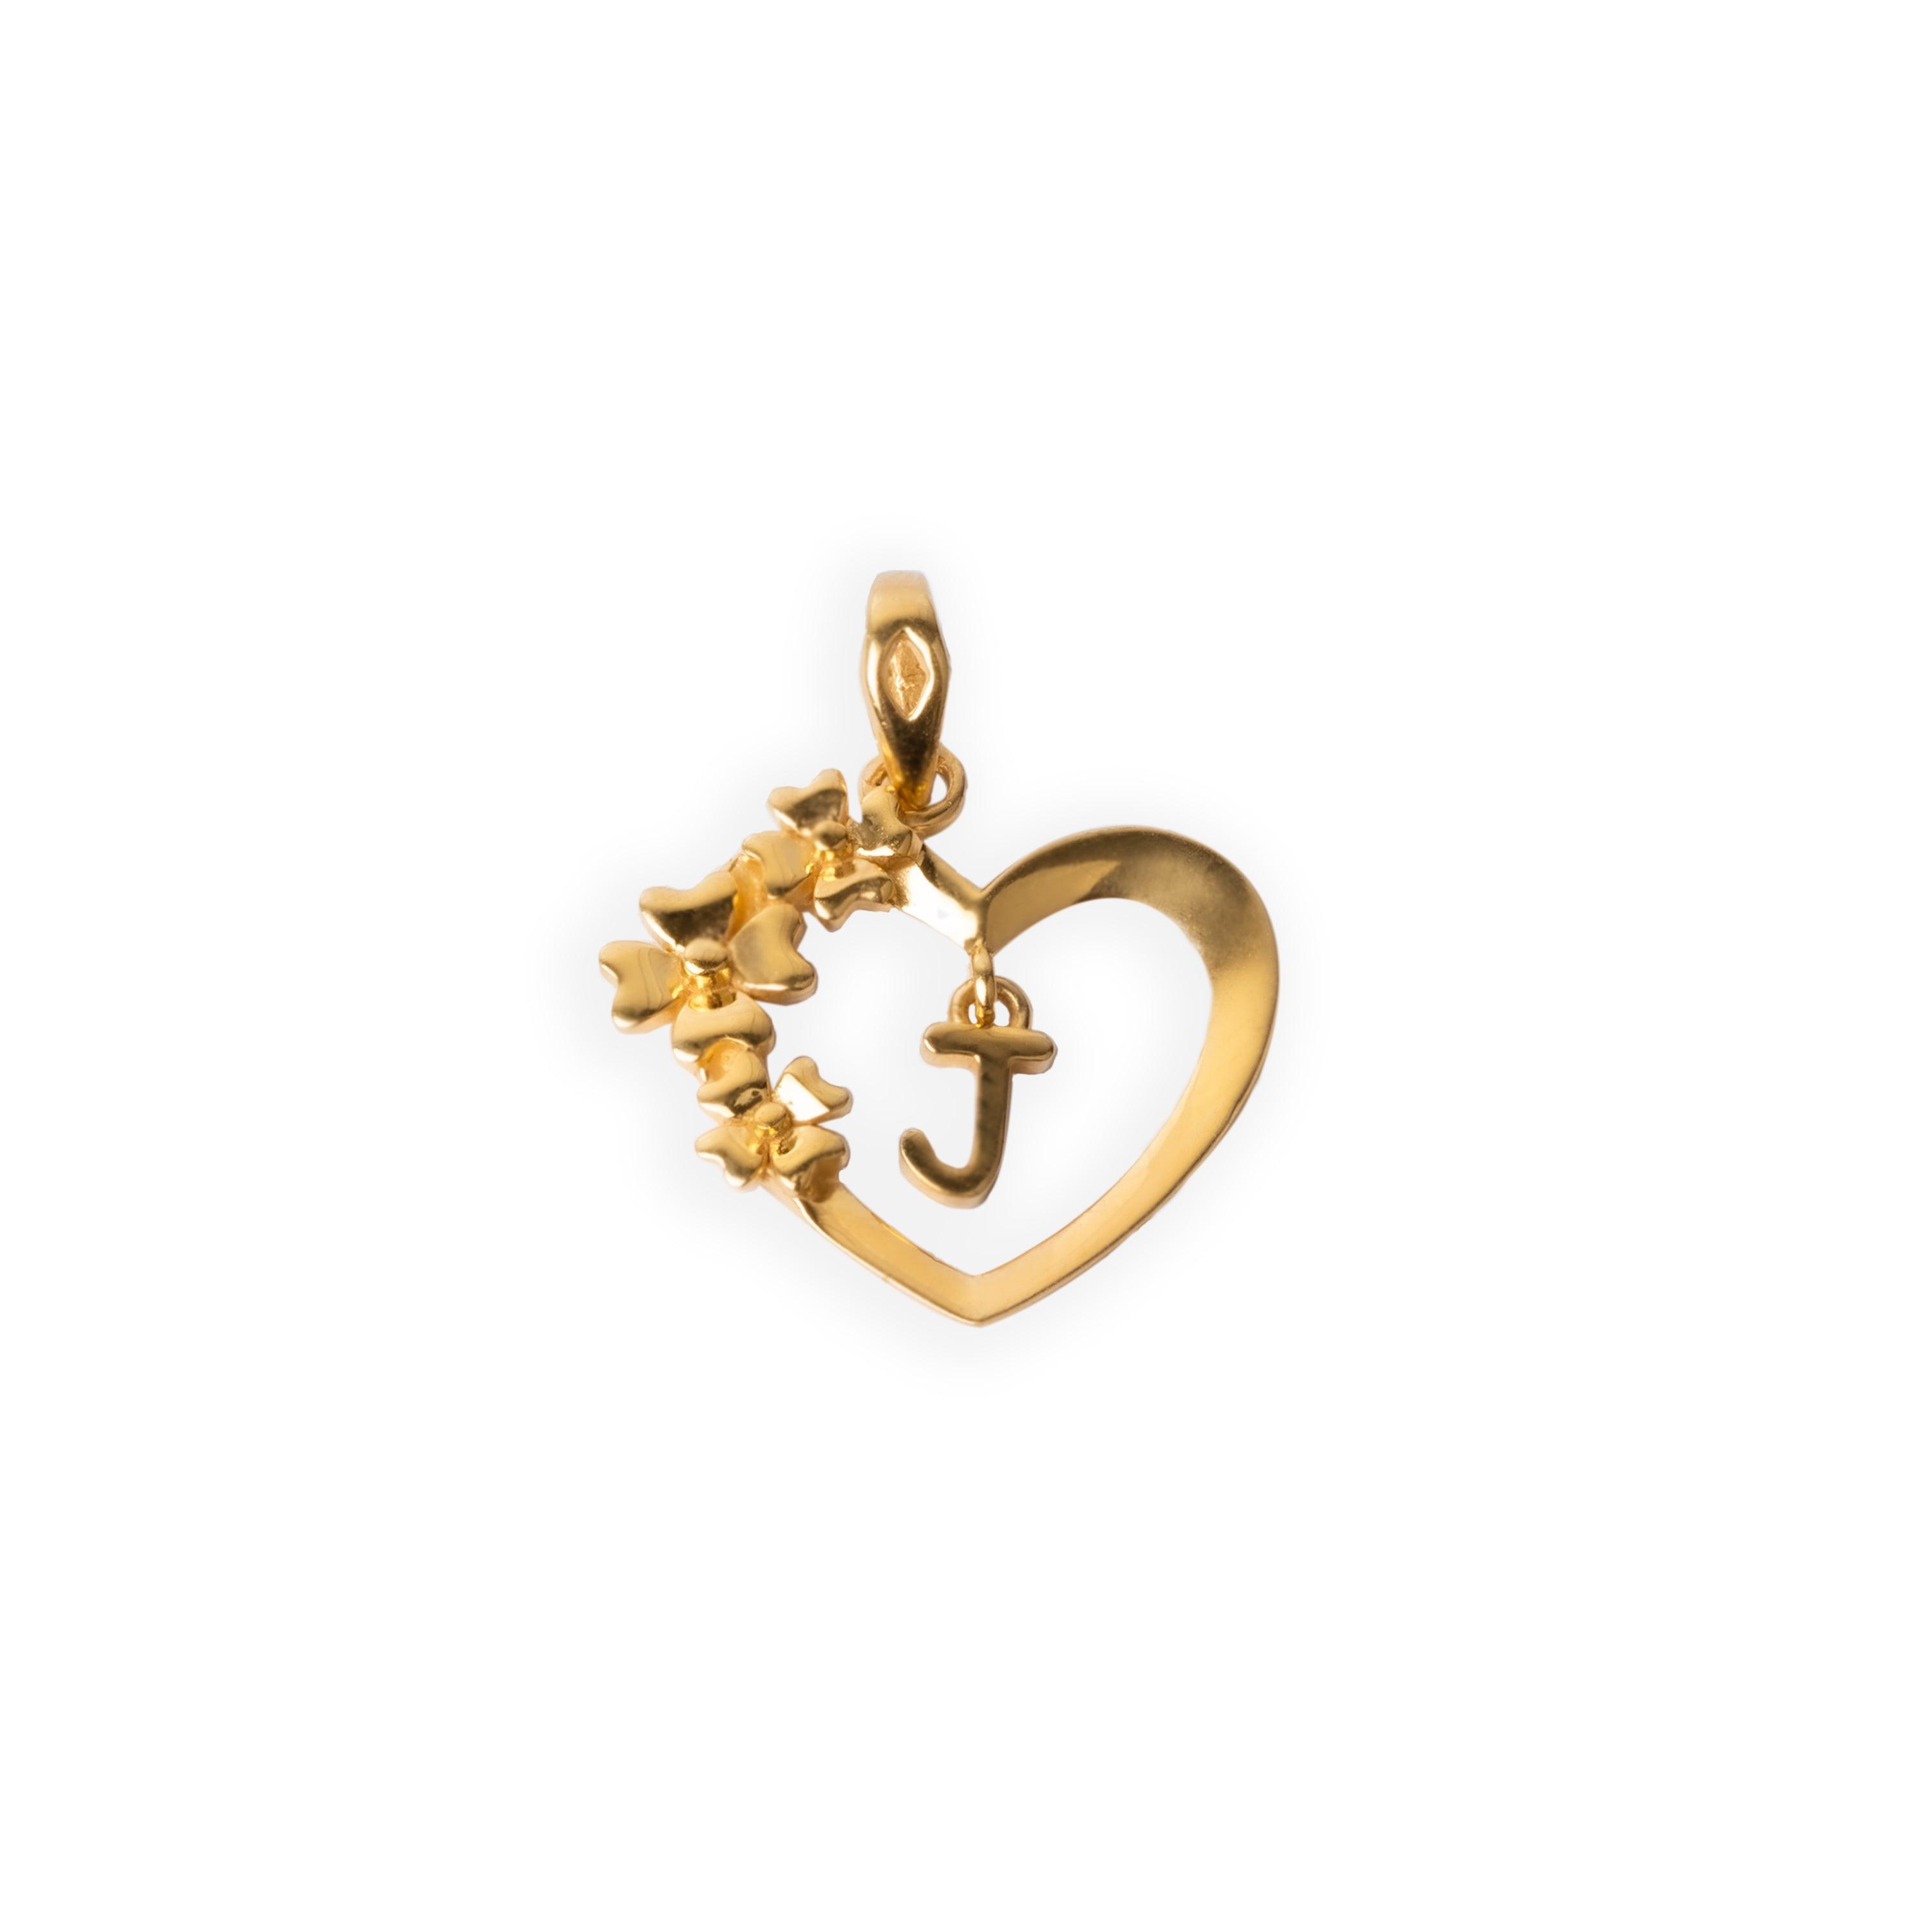 'J' 22ct Gold Heart Shape Initial Pendant with Flower Design P-7035-J - Minar Jewellers